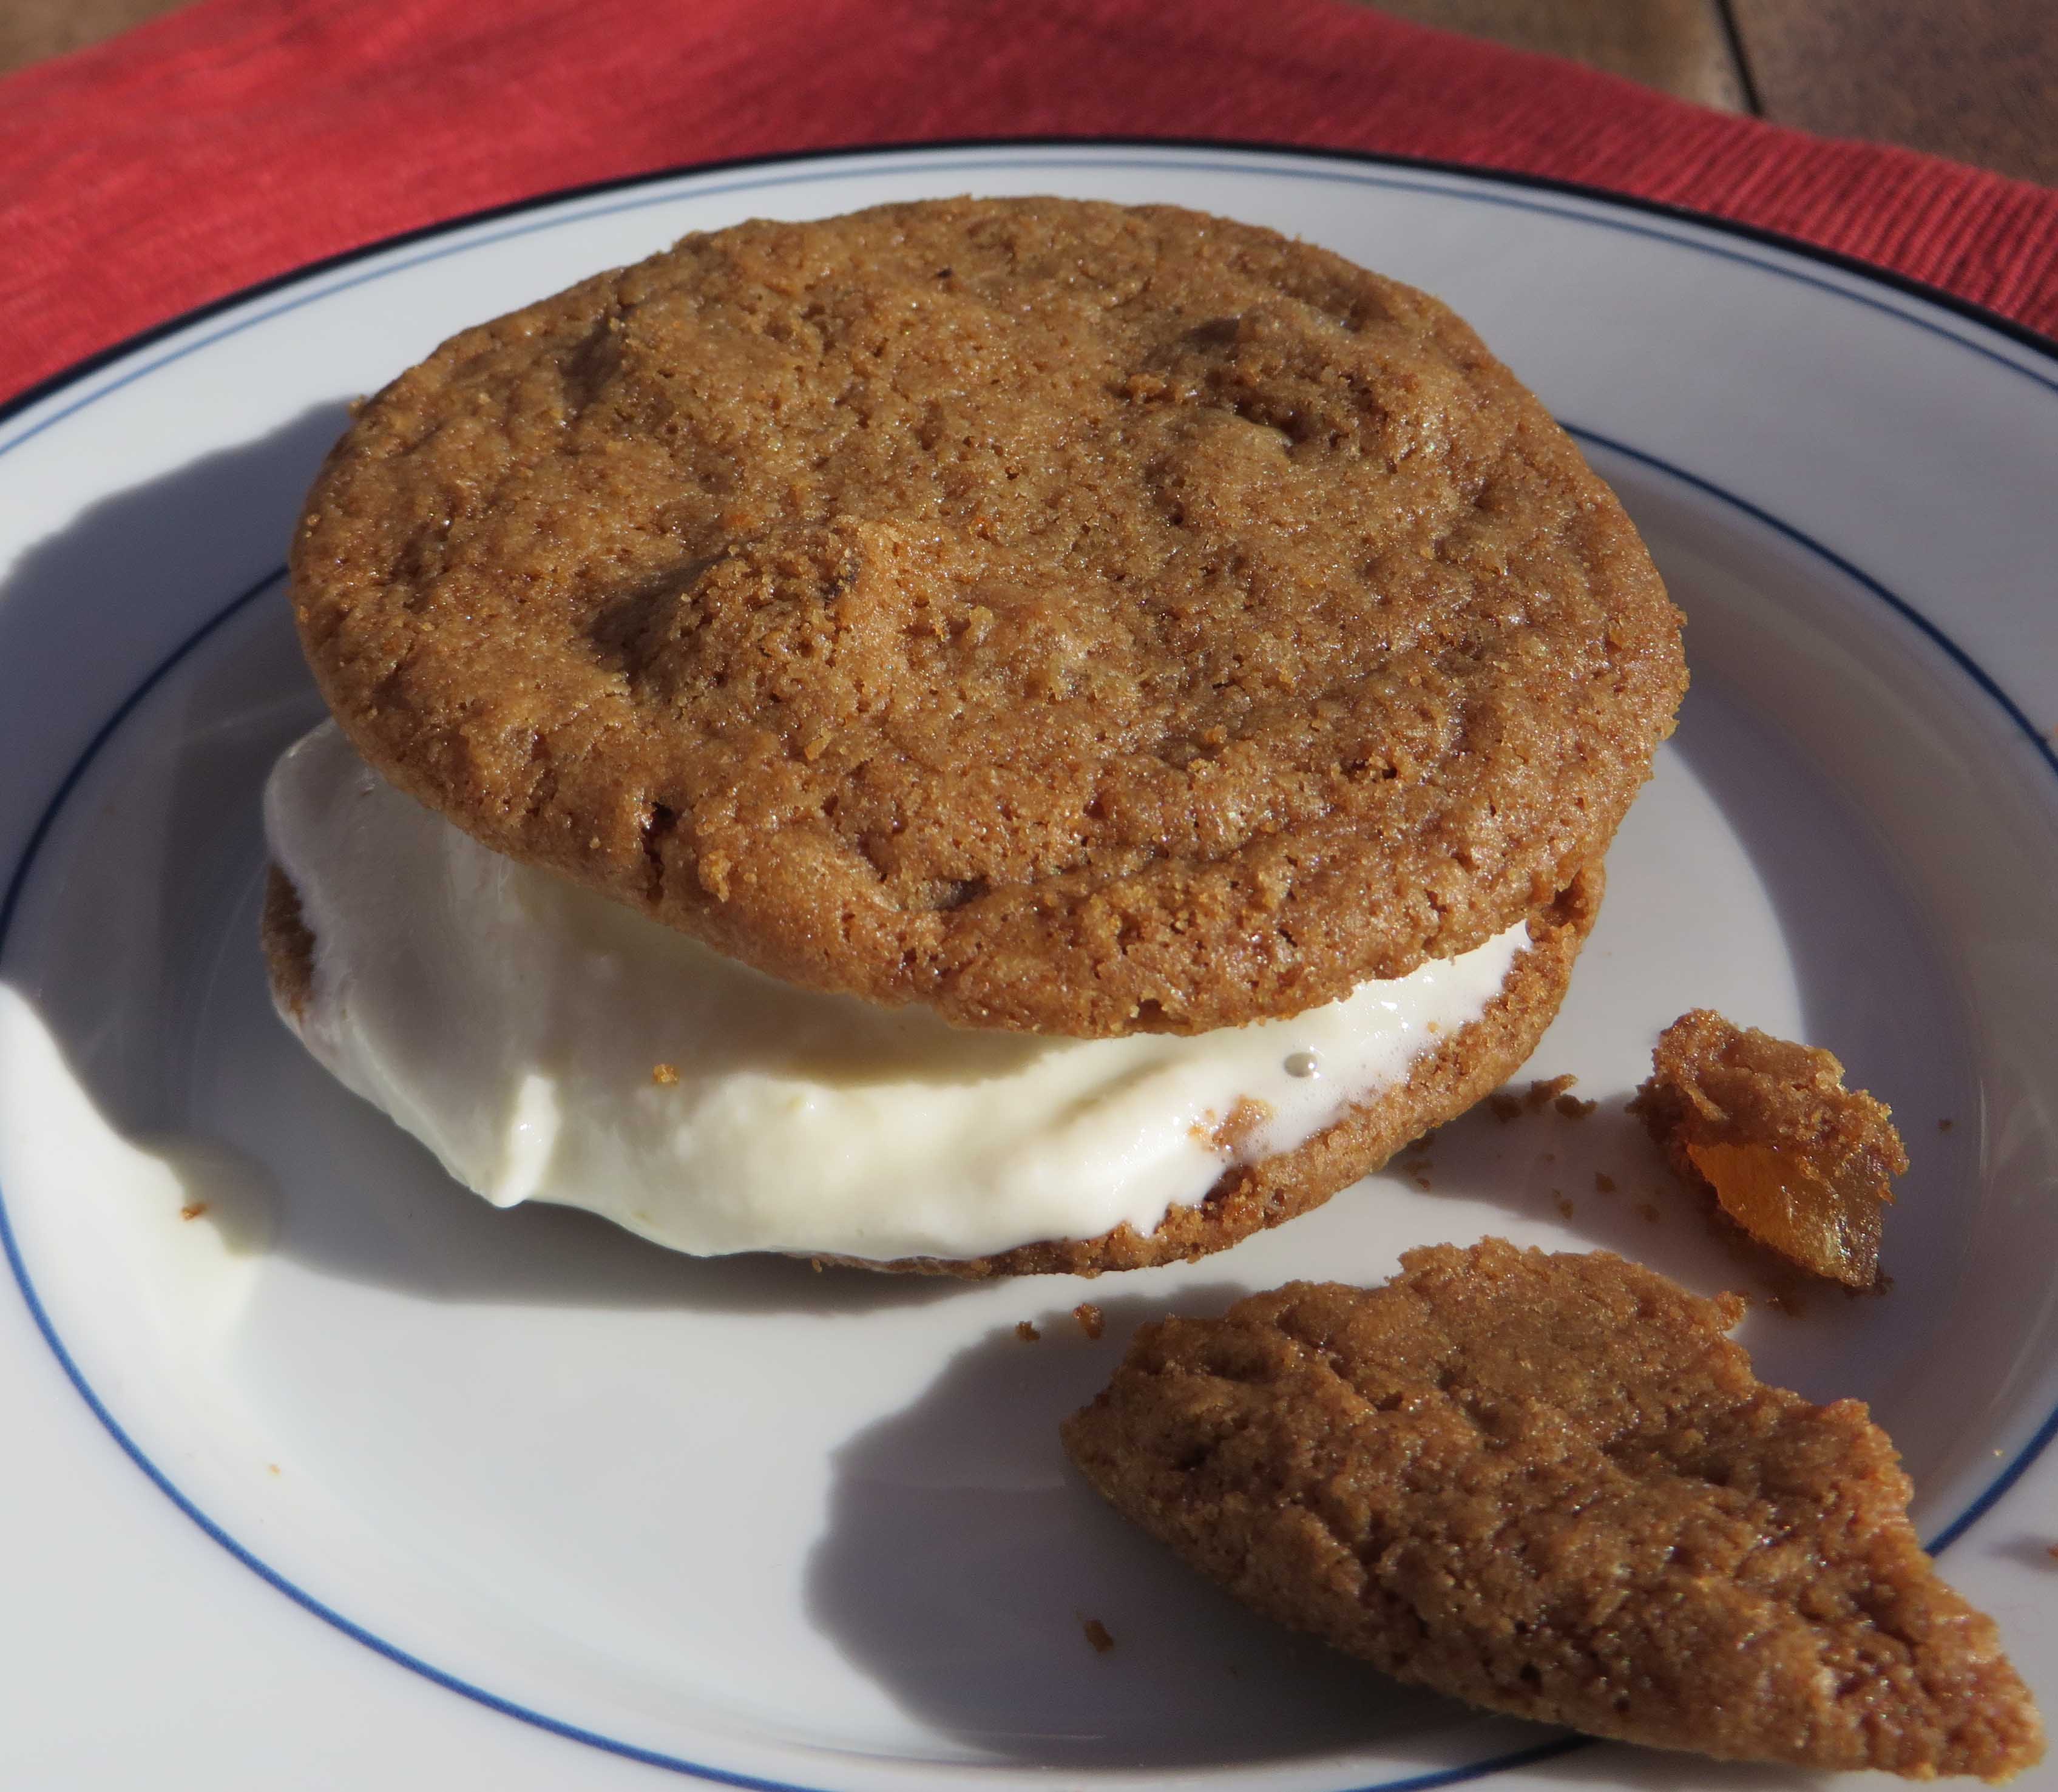 http://glutenfreemakeovers.com/wp-content/uploads/2014/12/ginger-zinger-ice-cream-sandwich2.jpg